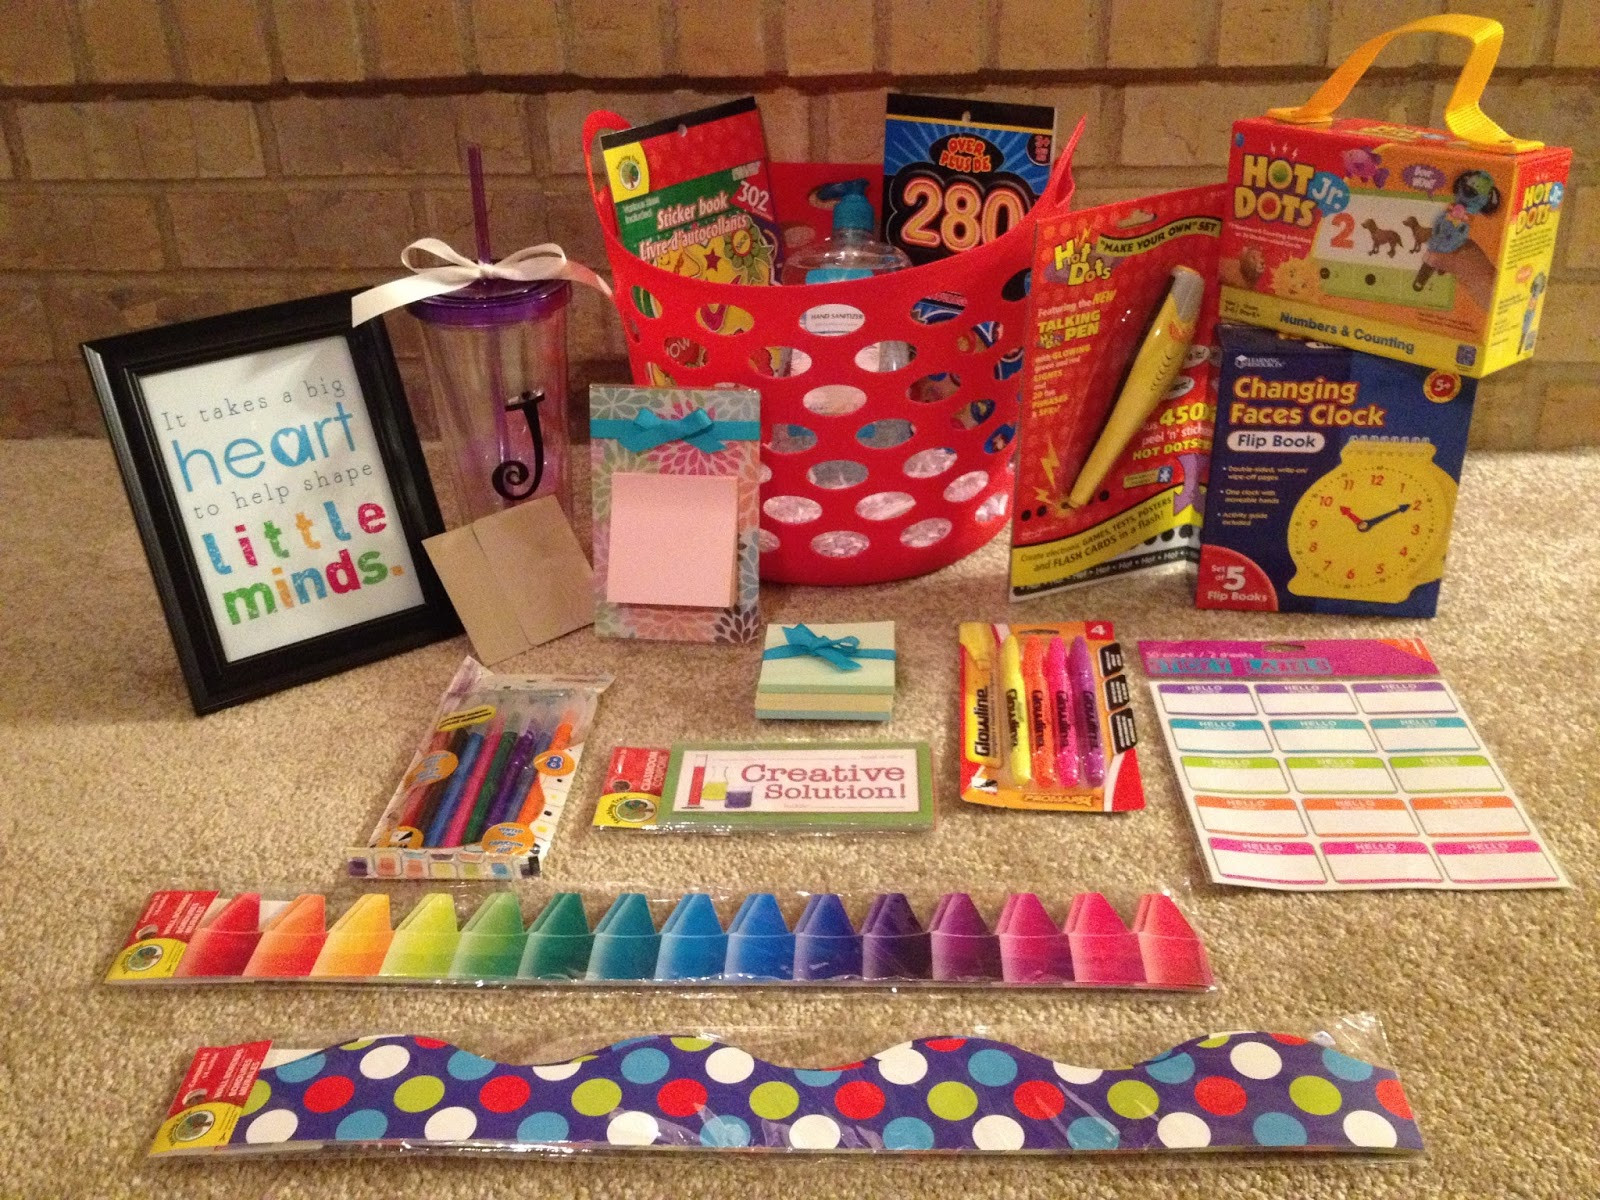 Best ideas about Teacher Gift Baskets Ideas
. Save or Pin Sugar & Spice DIY Teacher Gift Basket Now.